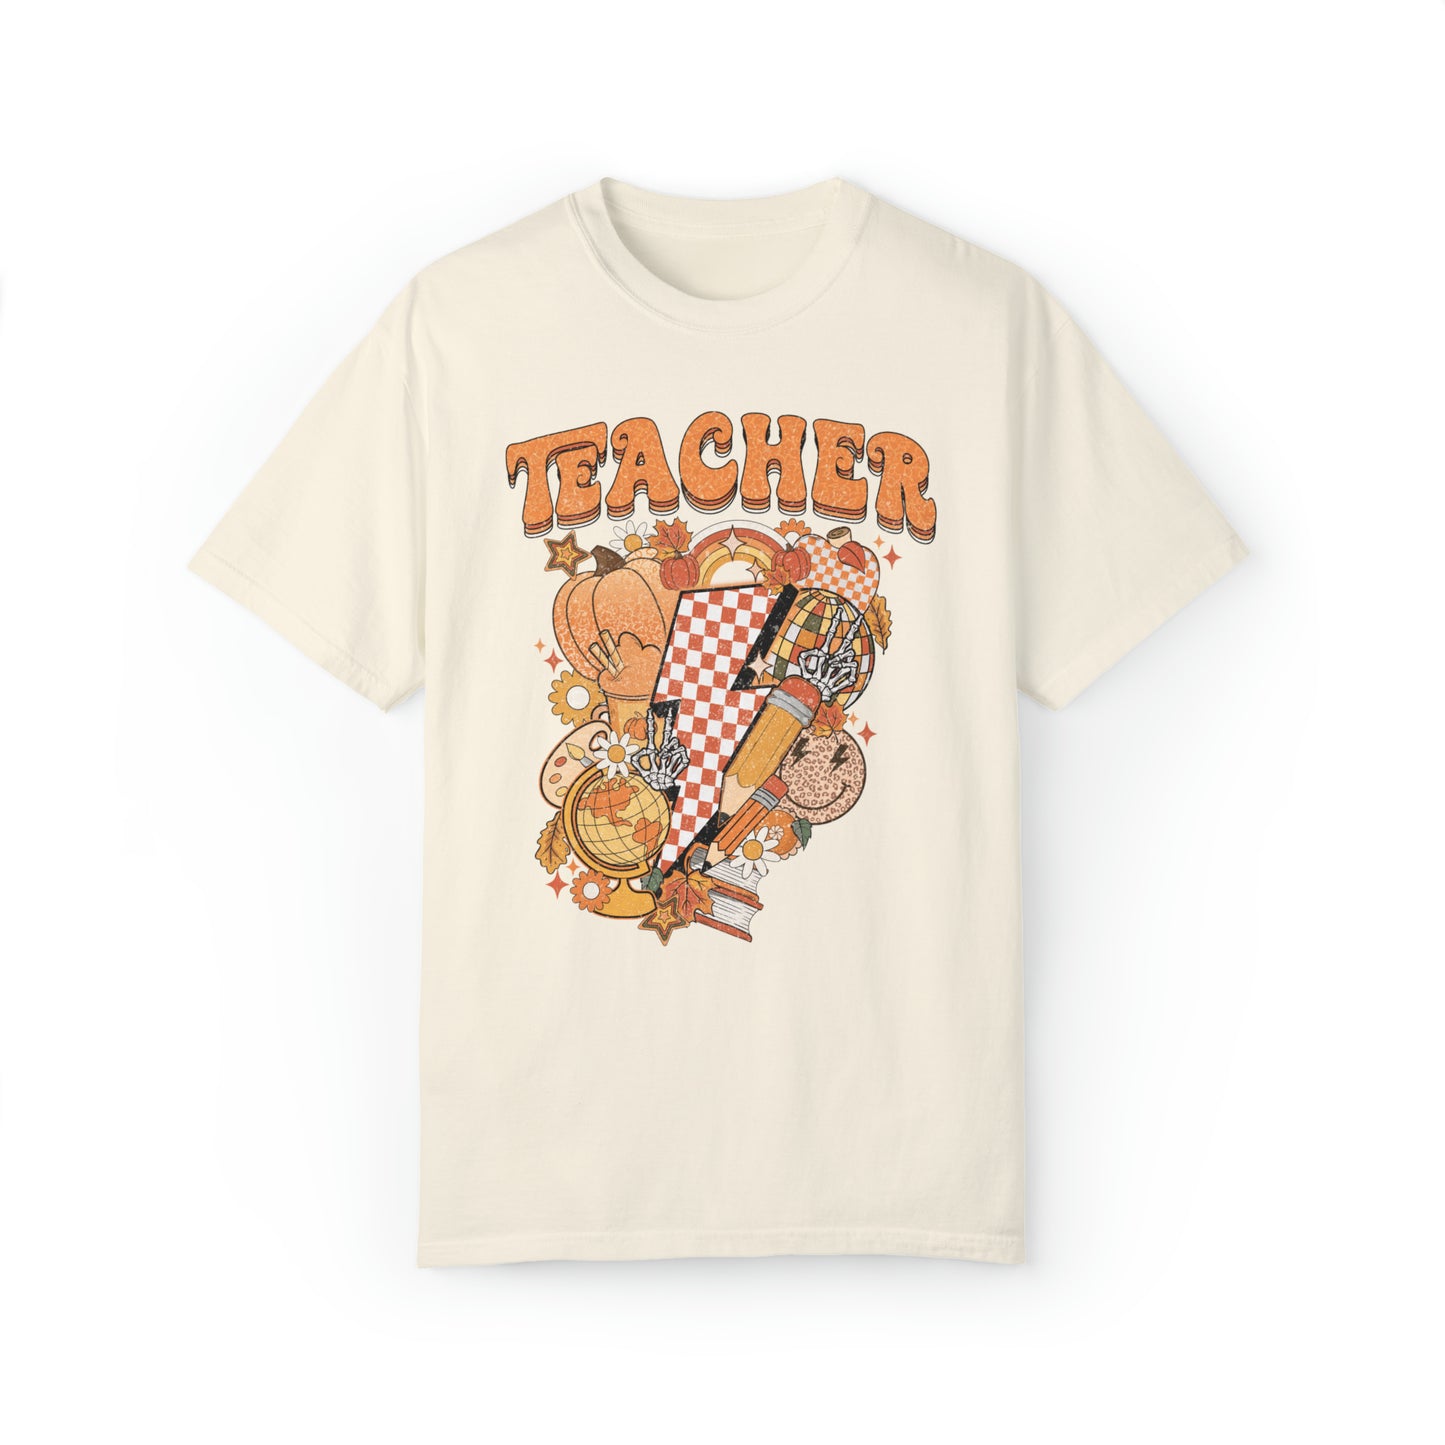 Fall Retro Teacher Comfort Colors Short Sleeve Tee